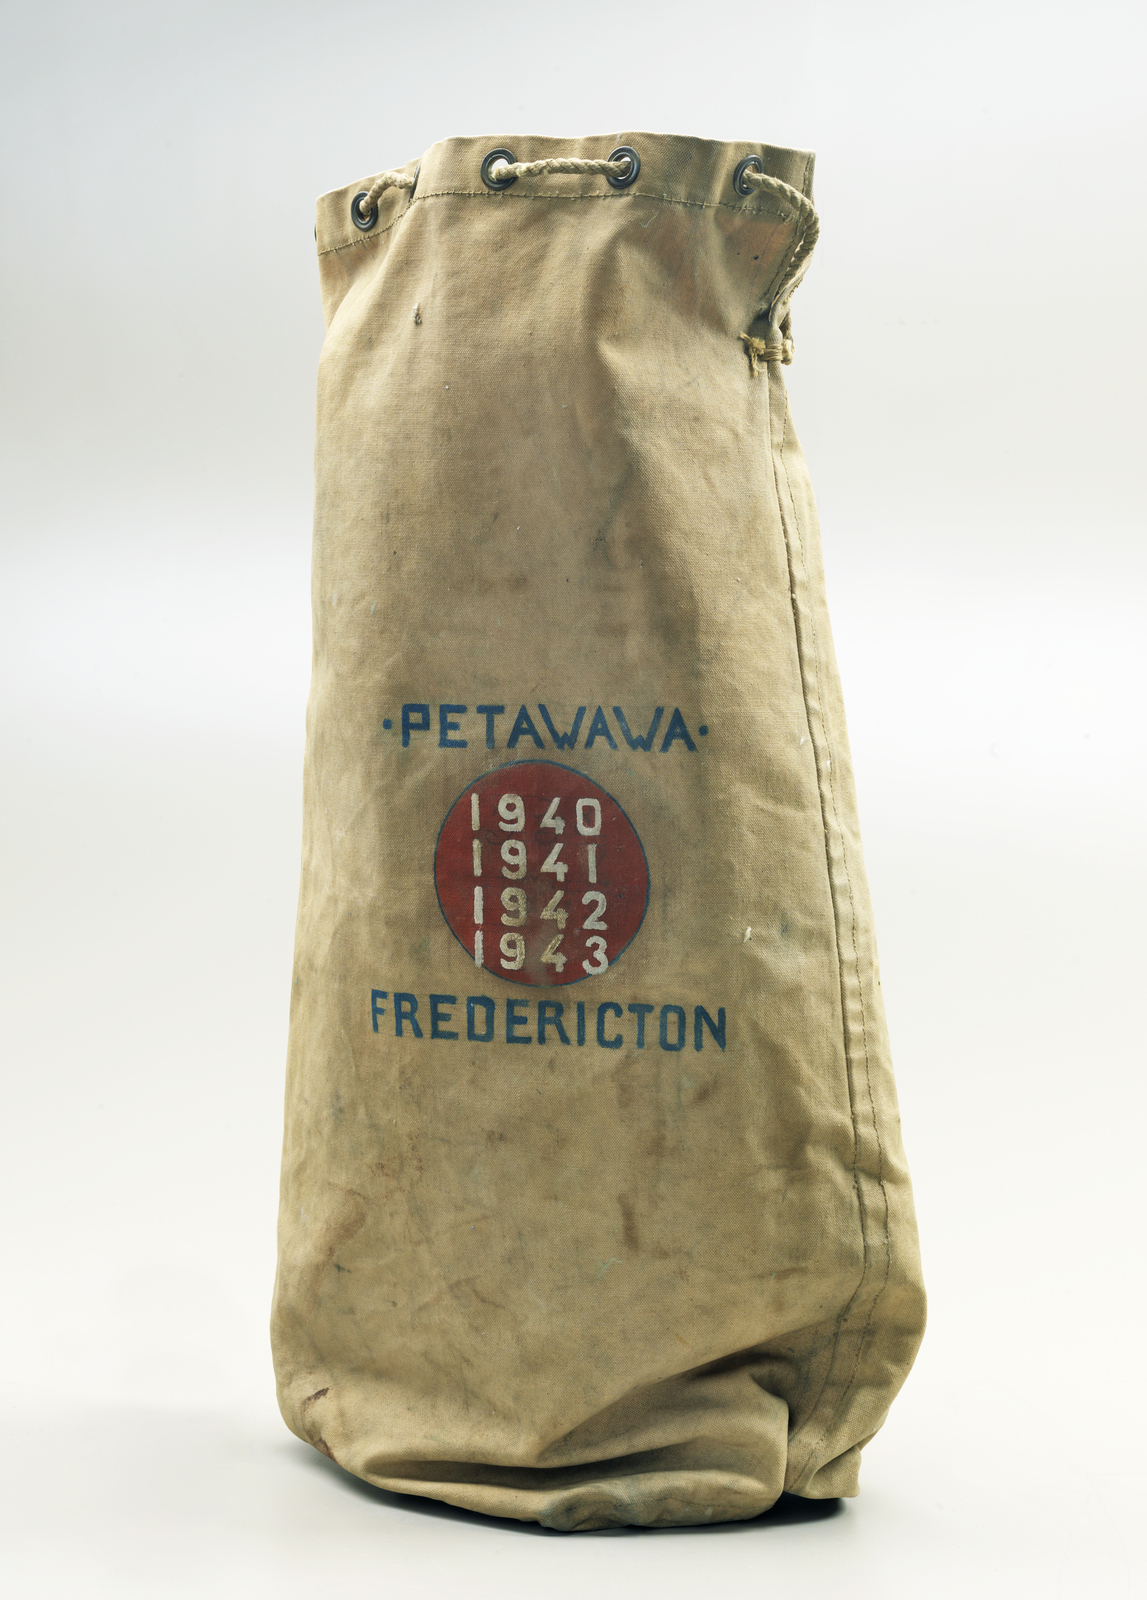 Sac de sport beige avec les mots Petawawa et Fredericton peints, et les dates de 1940 à 1943.//Beige duffle bag with painted words Petawawa and Fredericton, and the dates from 1940 to 1943.